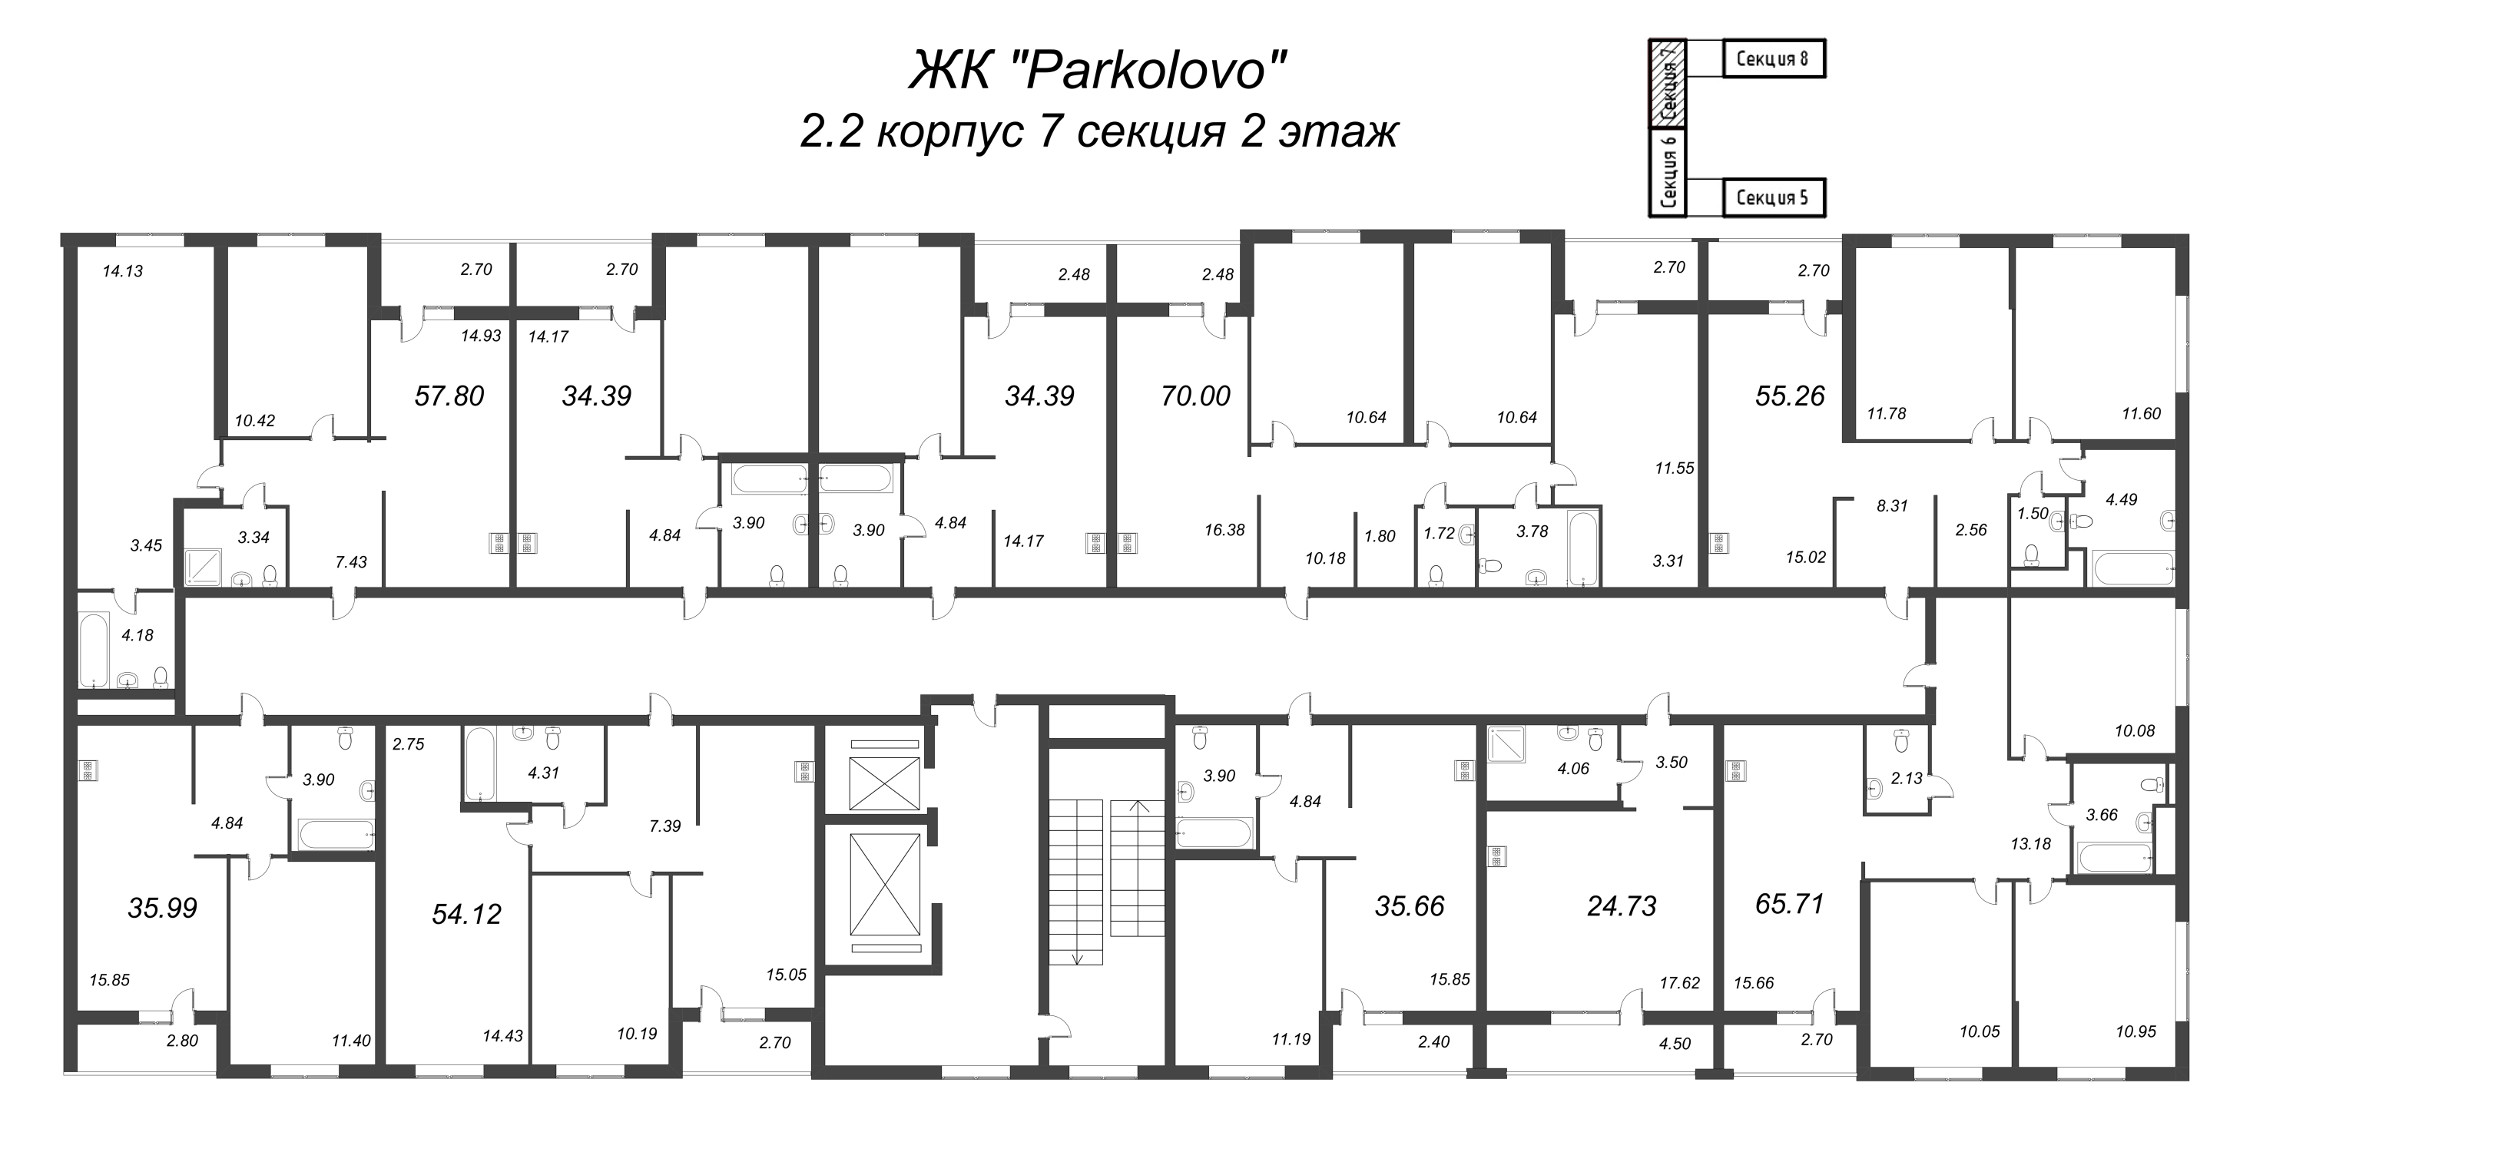 3-комнатная (Евро) квартира, 55.26 м² - планировка этажа